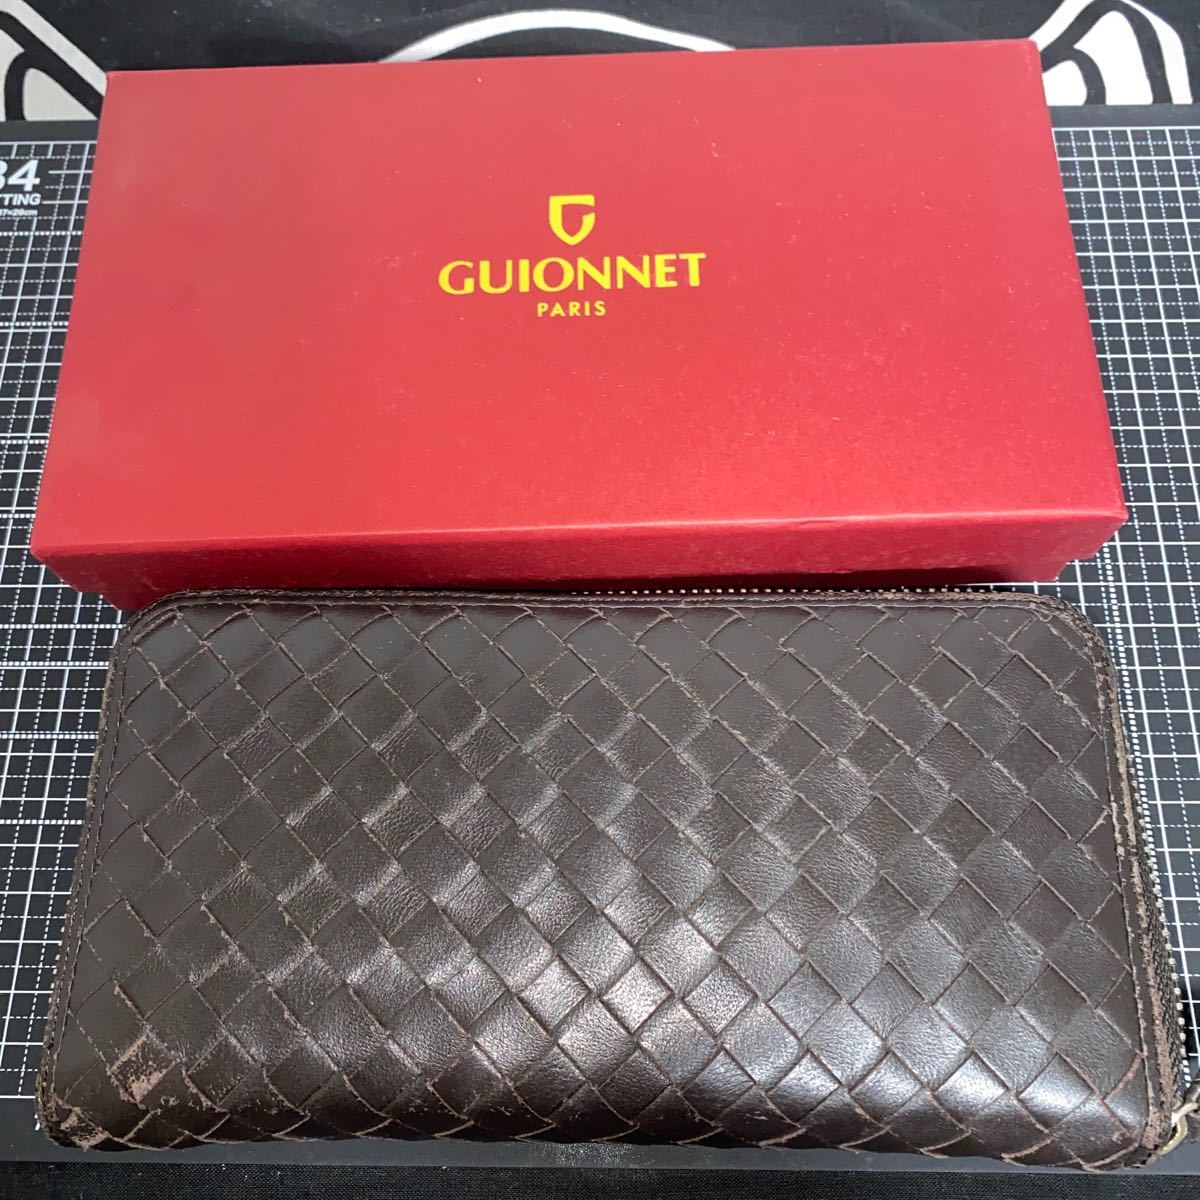 【GUIONNET】 GUIONNET 滑らかなラム革で仕上げた イントレチャートウォレット メンズ 長財布　